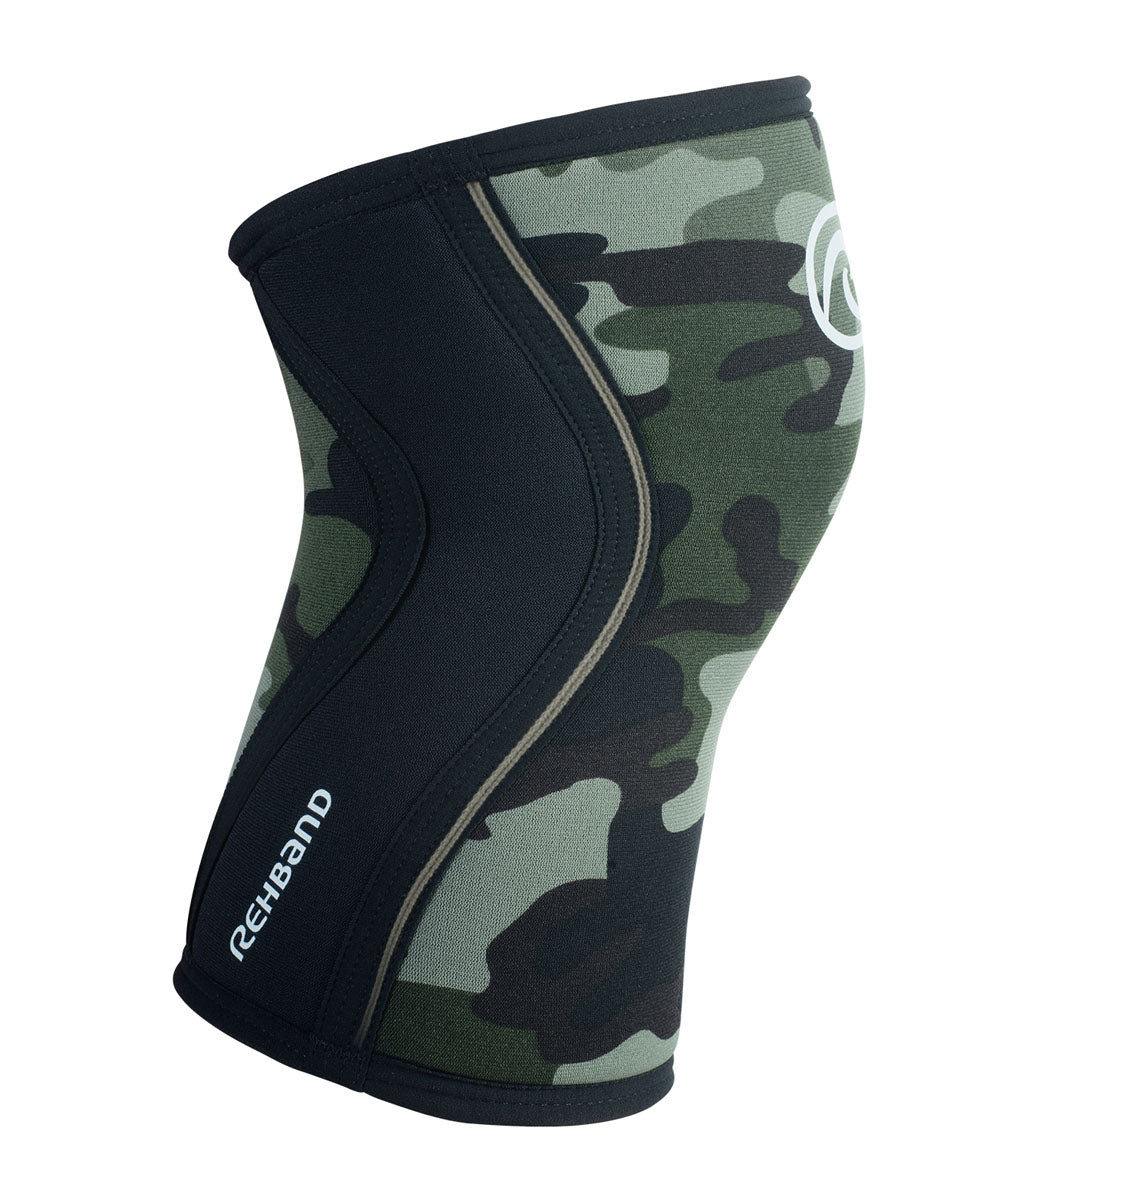 105417 - Rehband Rx Knee Sleeve - Camo - 7mm - Side